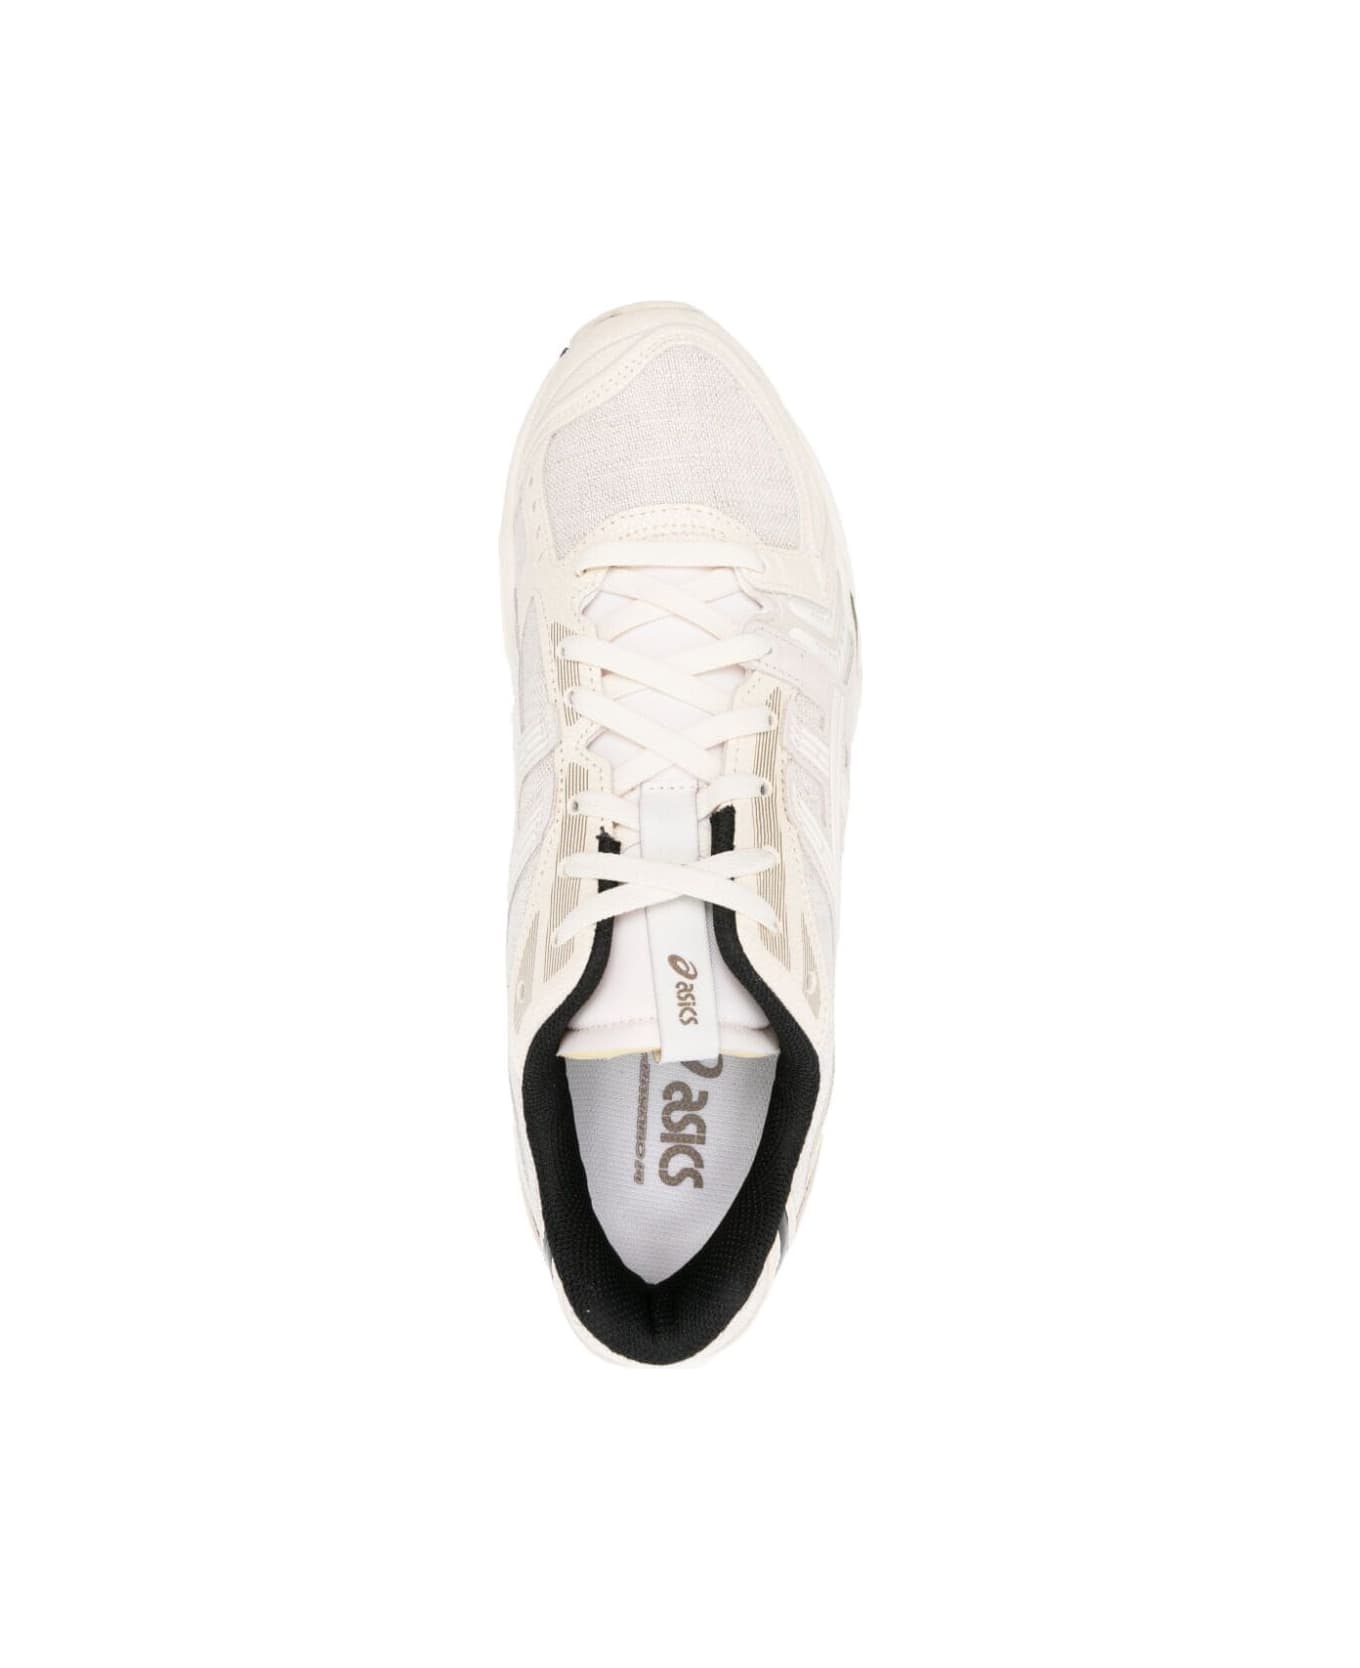 Asics Gel Kayano 14 Sneakers - Cream Cream スニーカー